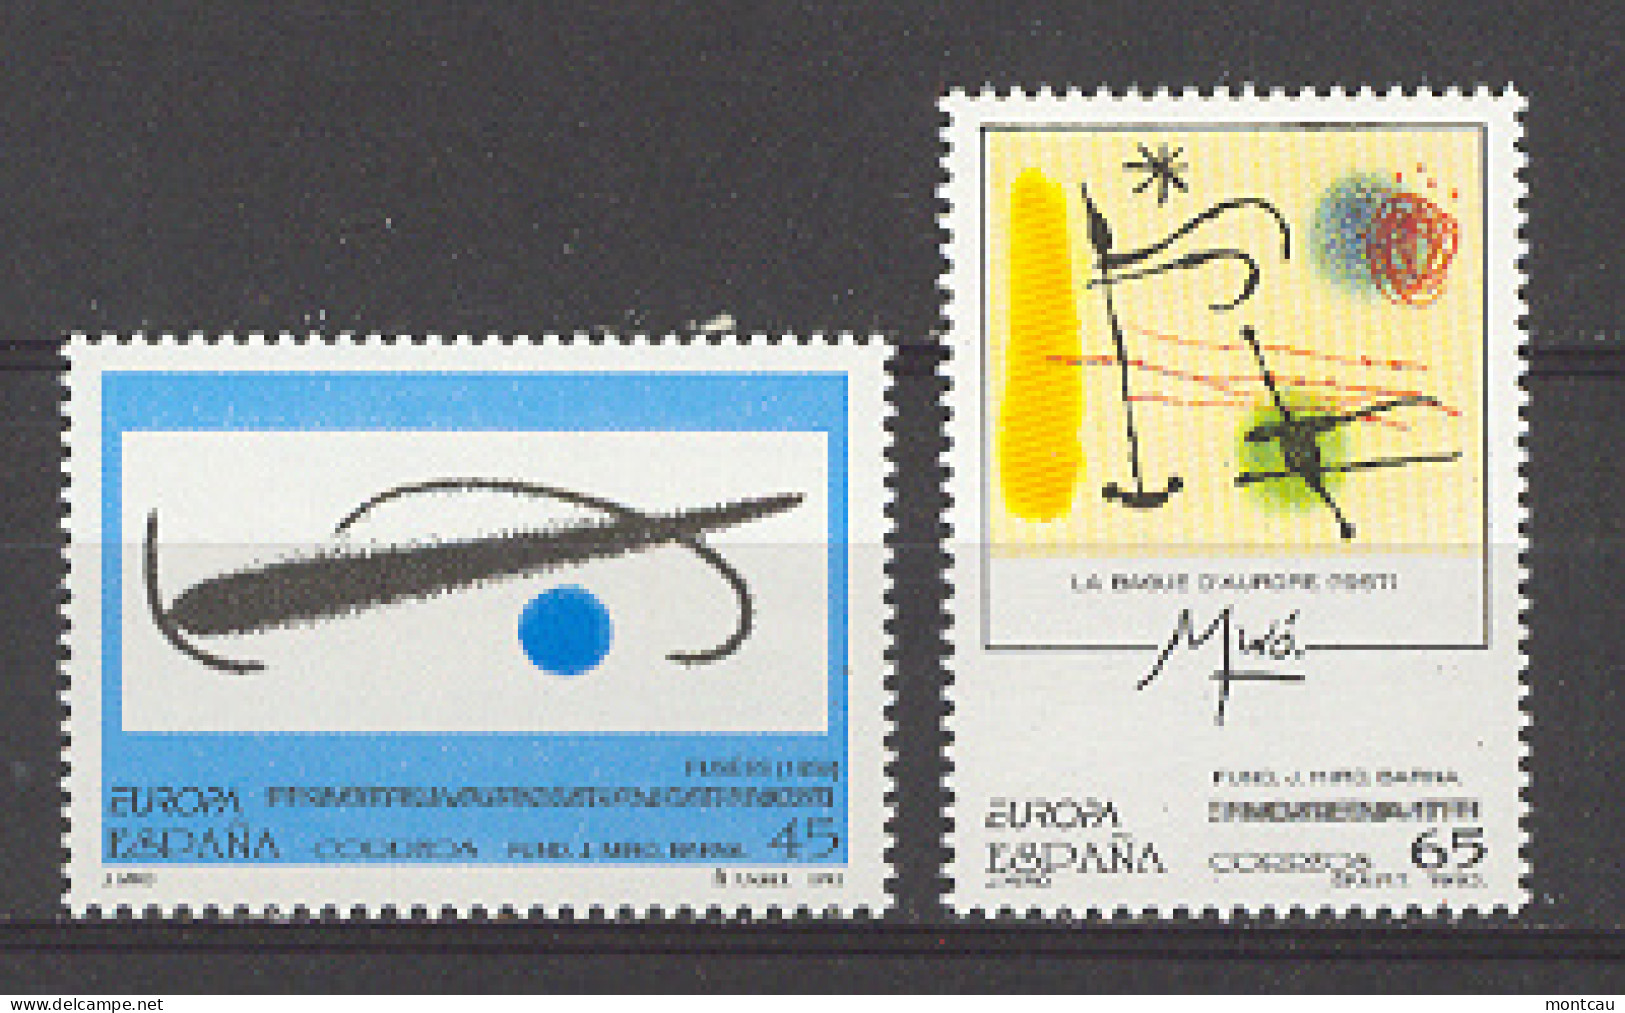 Spain 1993 - Europa - Miro Ed 3250-51 (**) - 1993